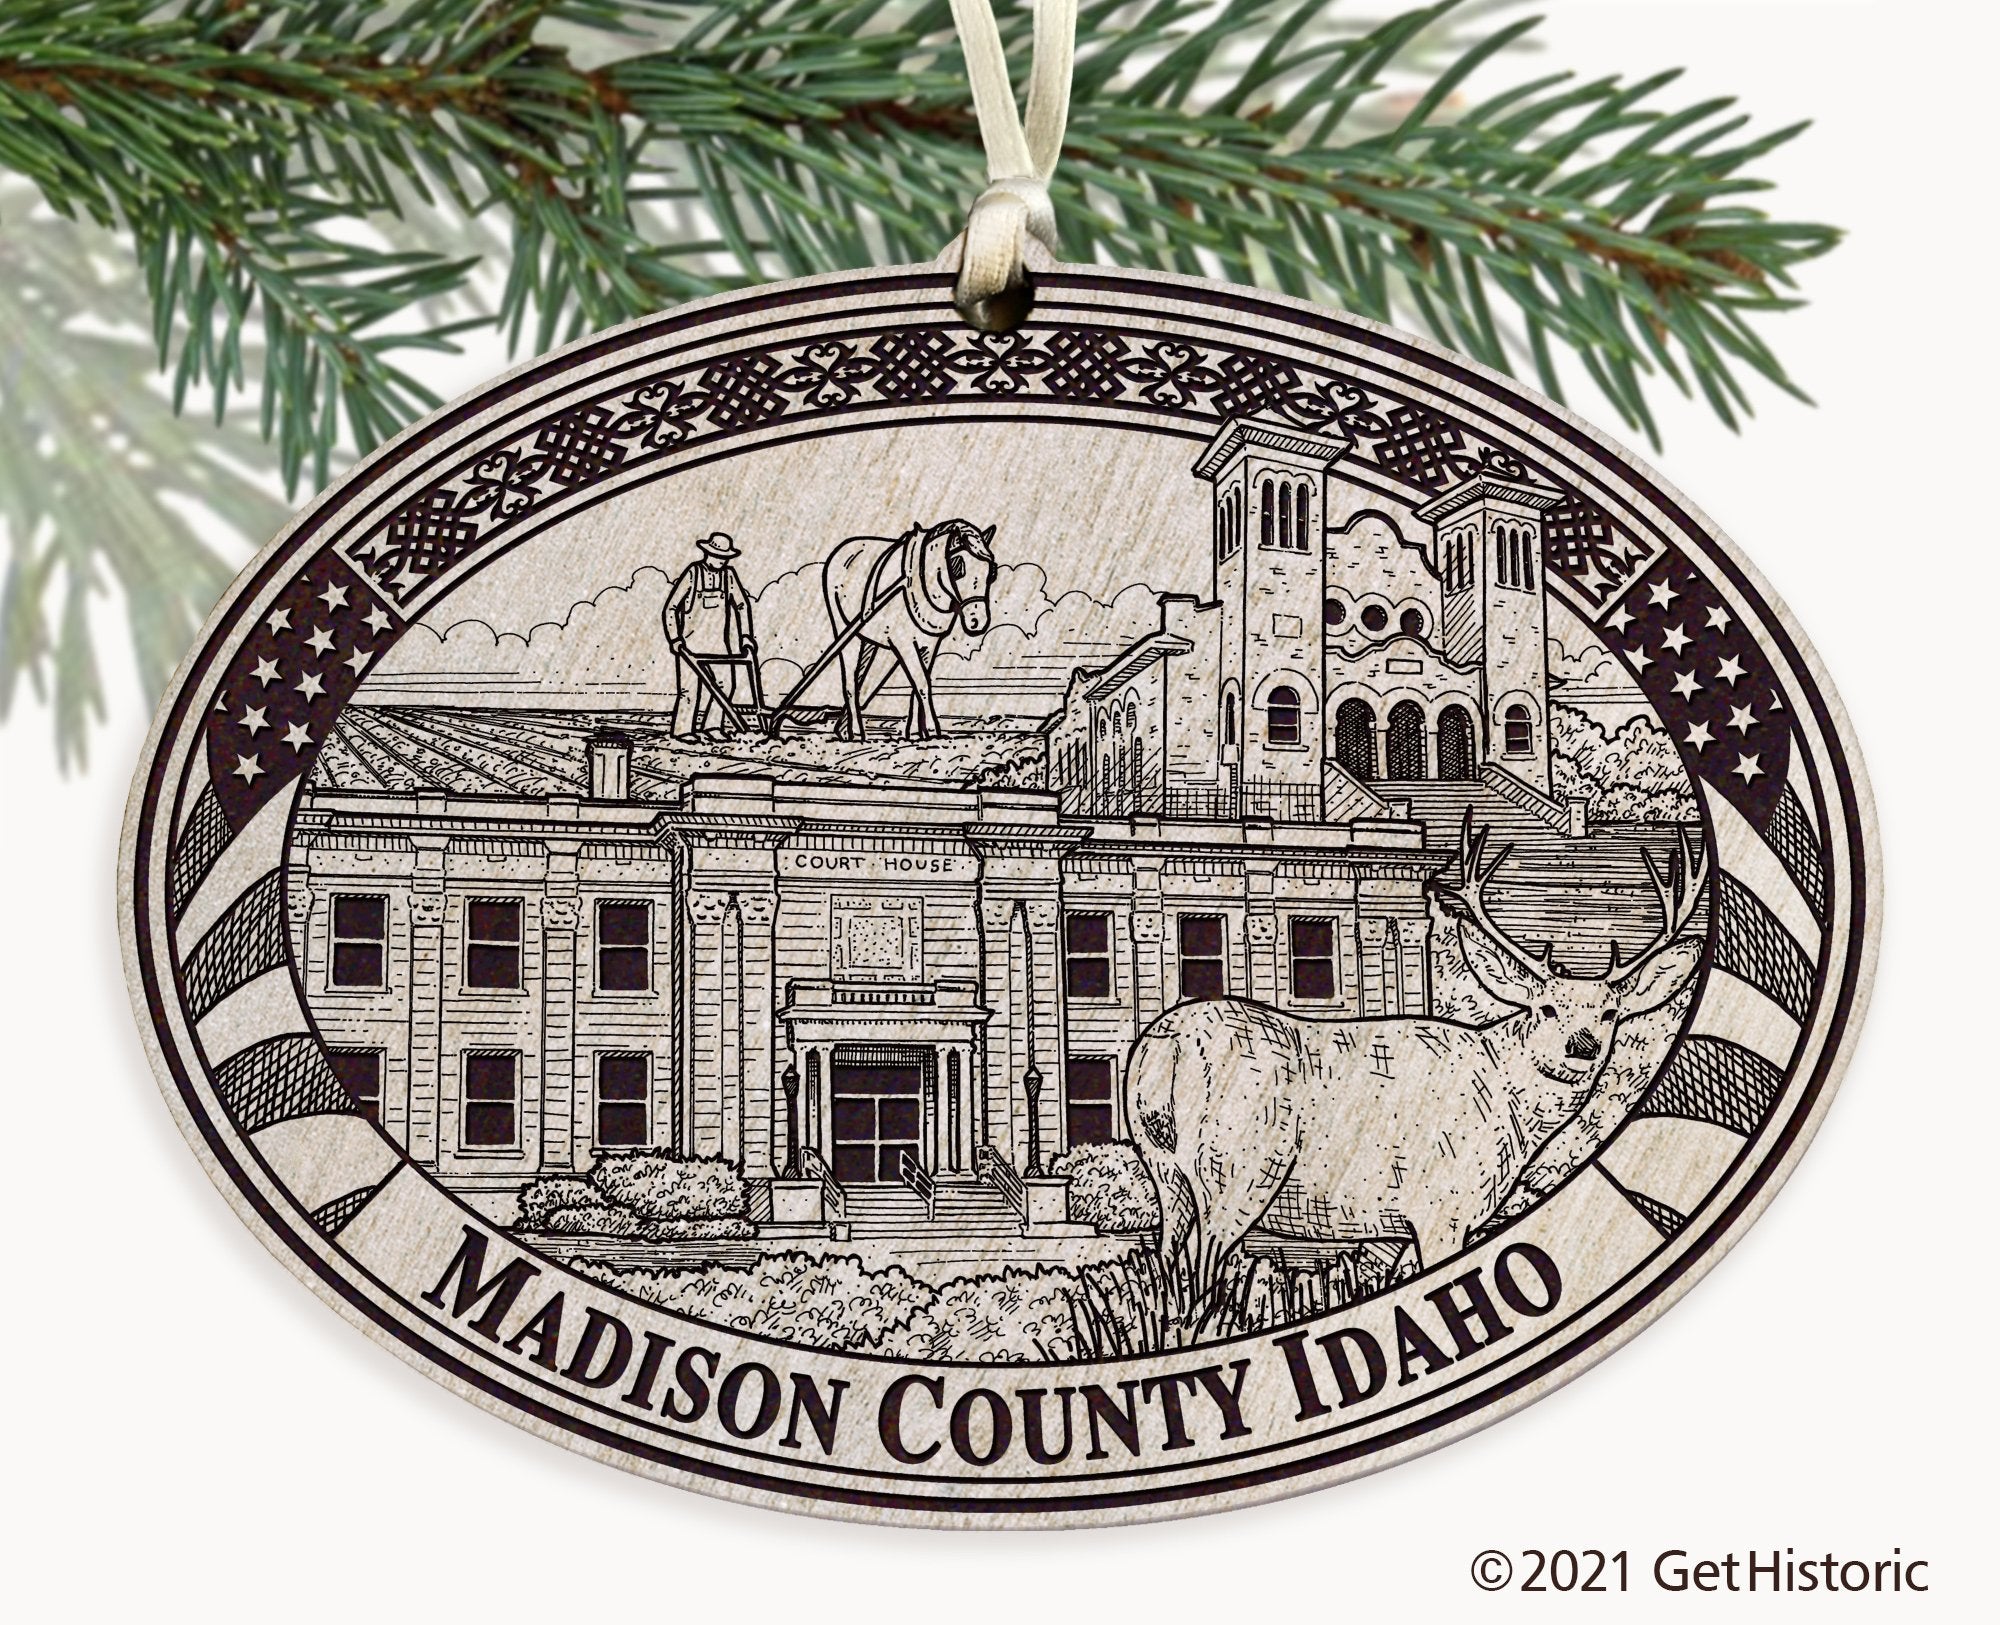 Madison County Idaho Engraved Ornament